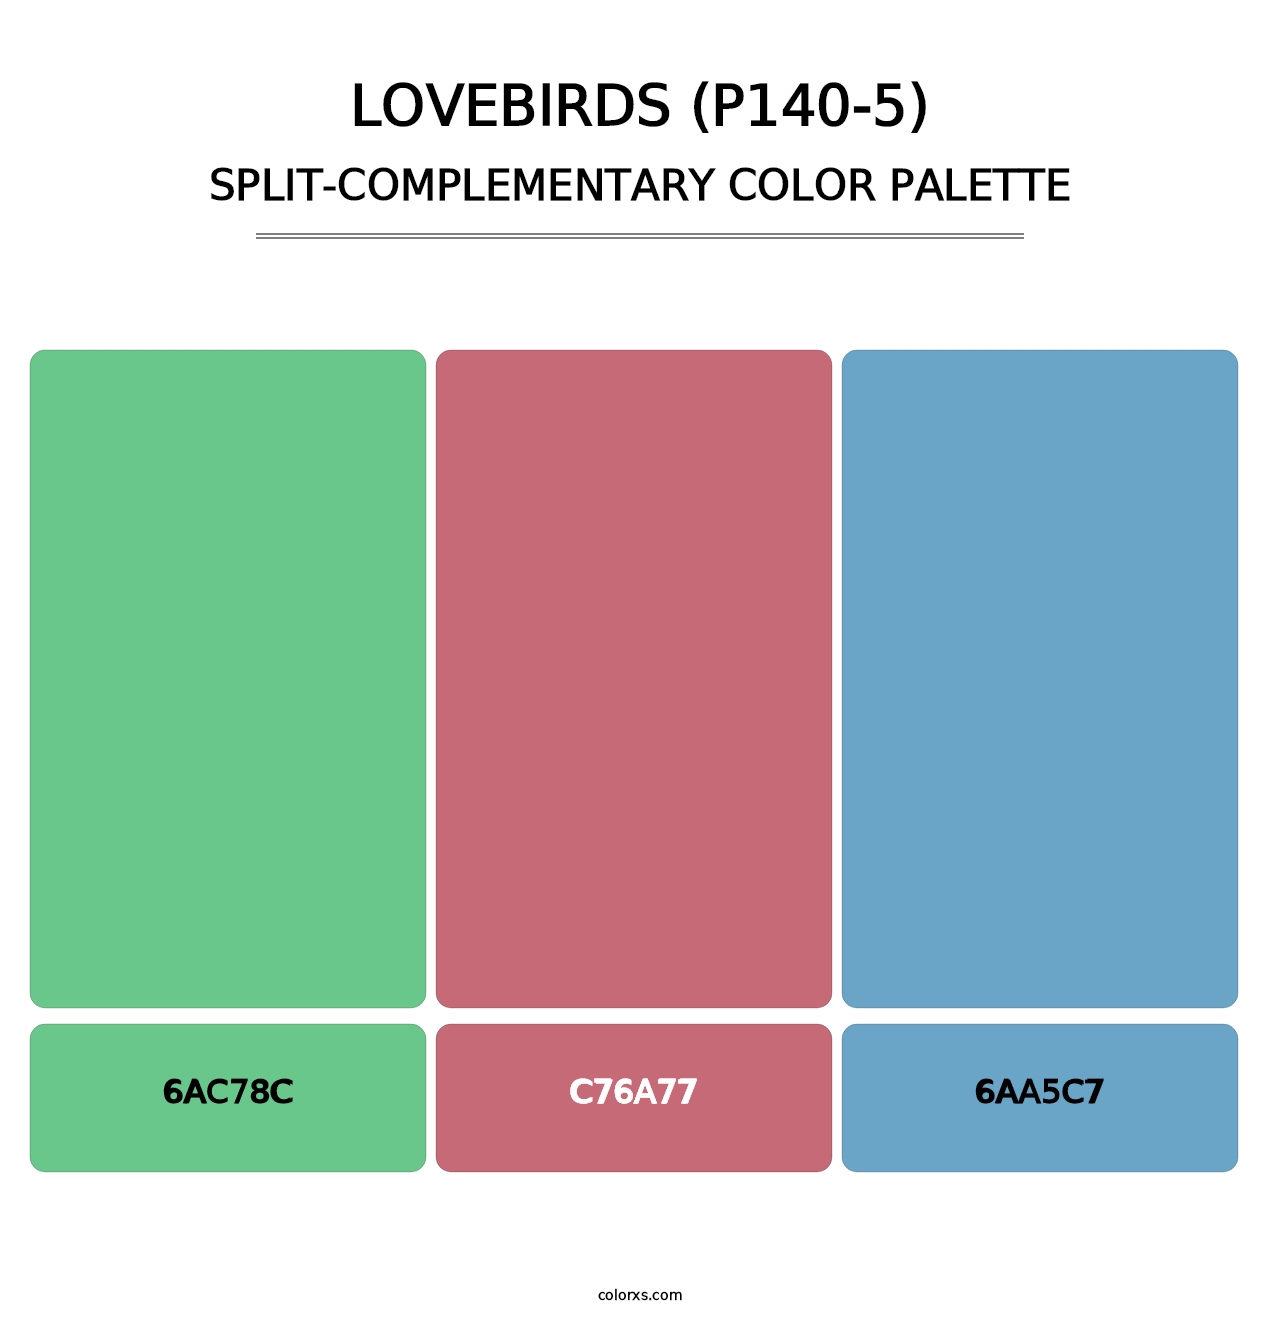 Lovebirds (P140-5) - Split-Complementary Color Palette